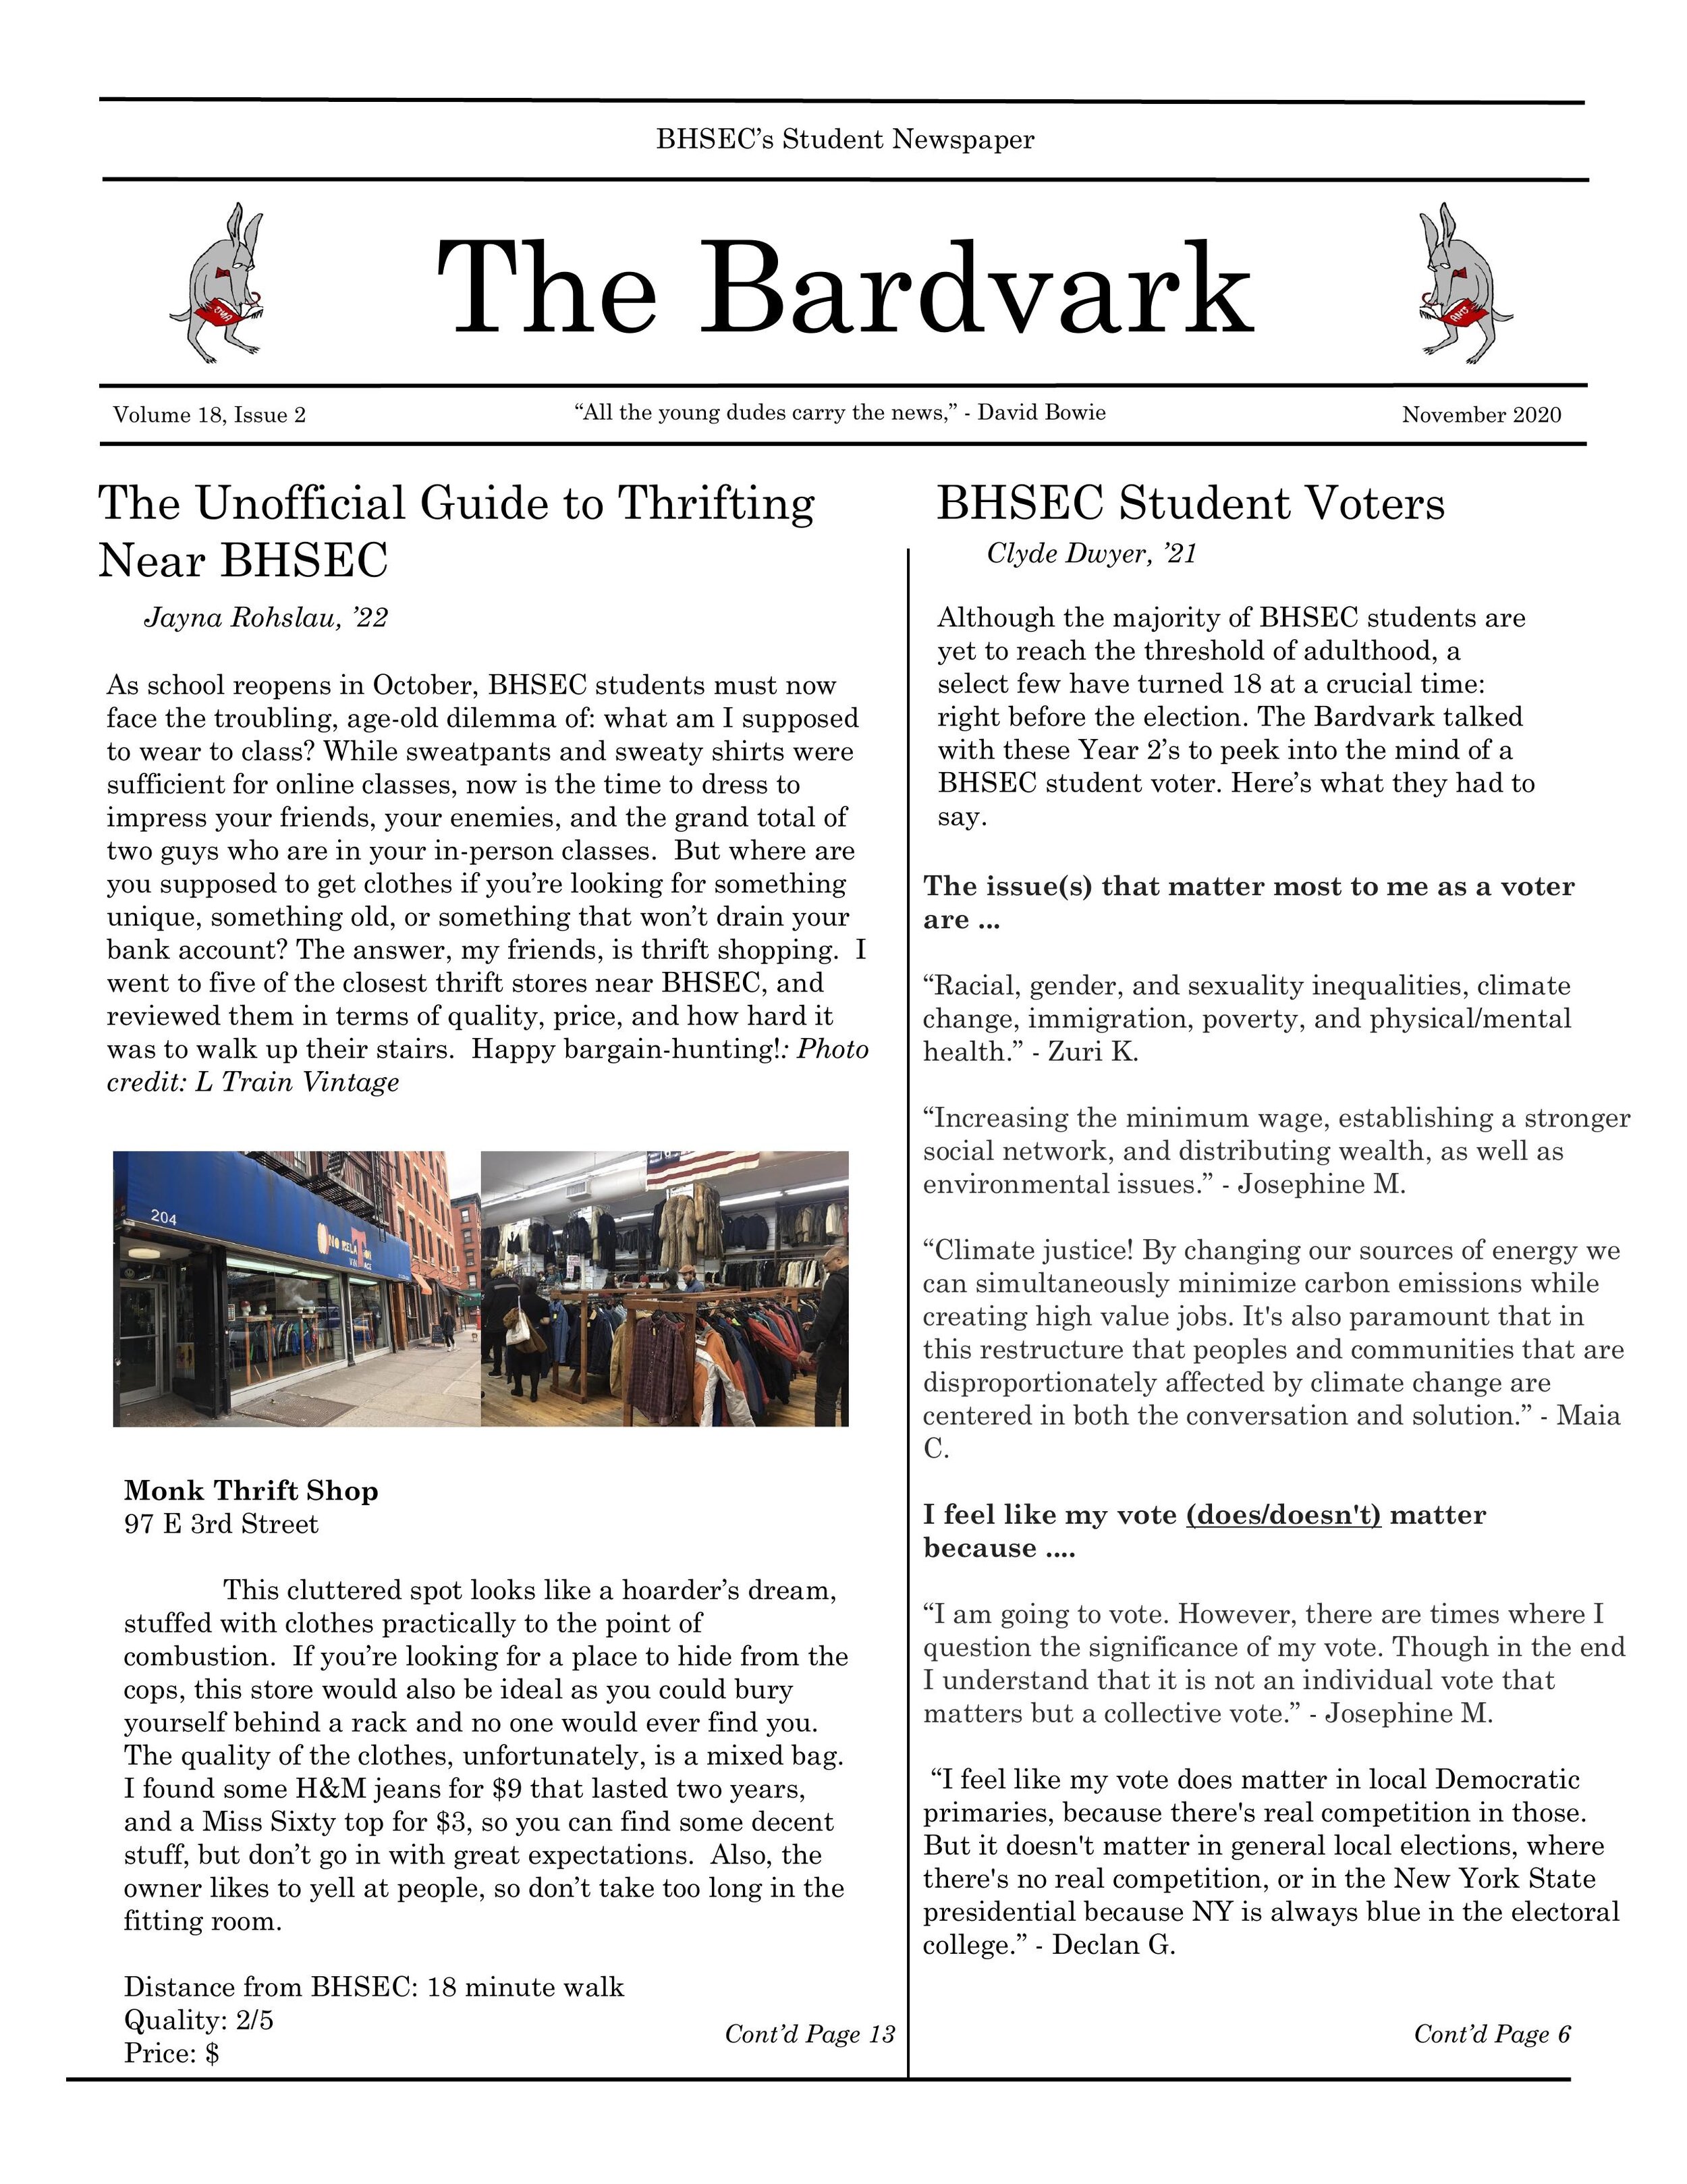 Updated Bardvark Vol 18.2-1.jpg